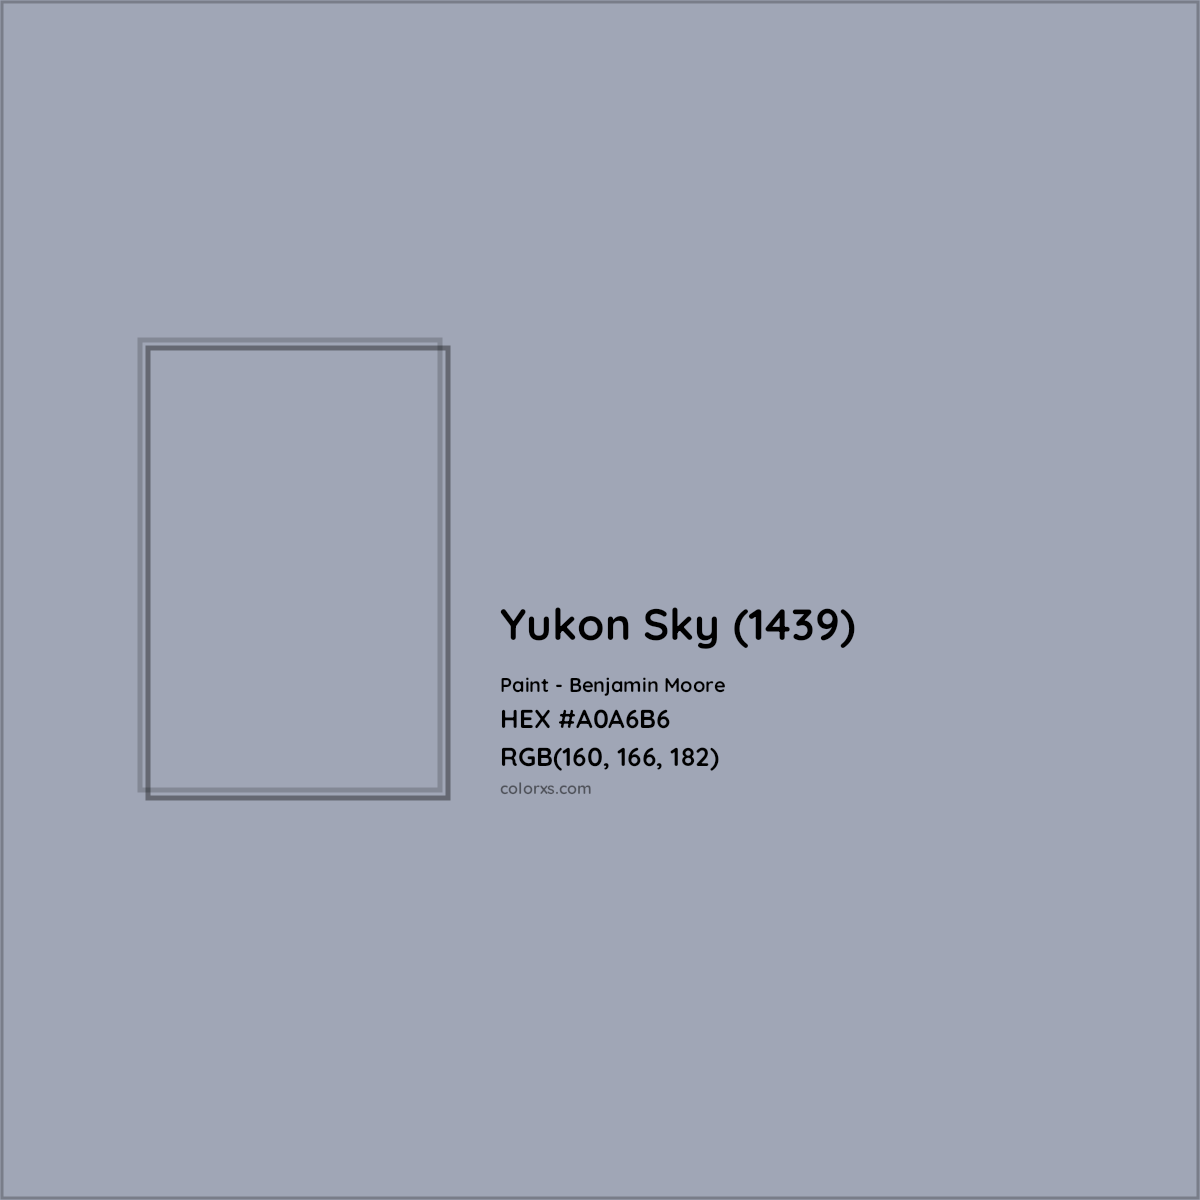 HEX #A0A6B6 Yukon Sky (1439) Paint Benjamin Moore - Color Code